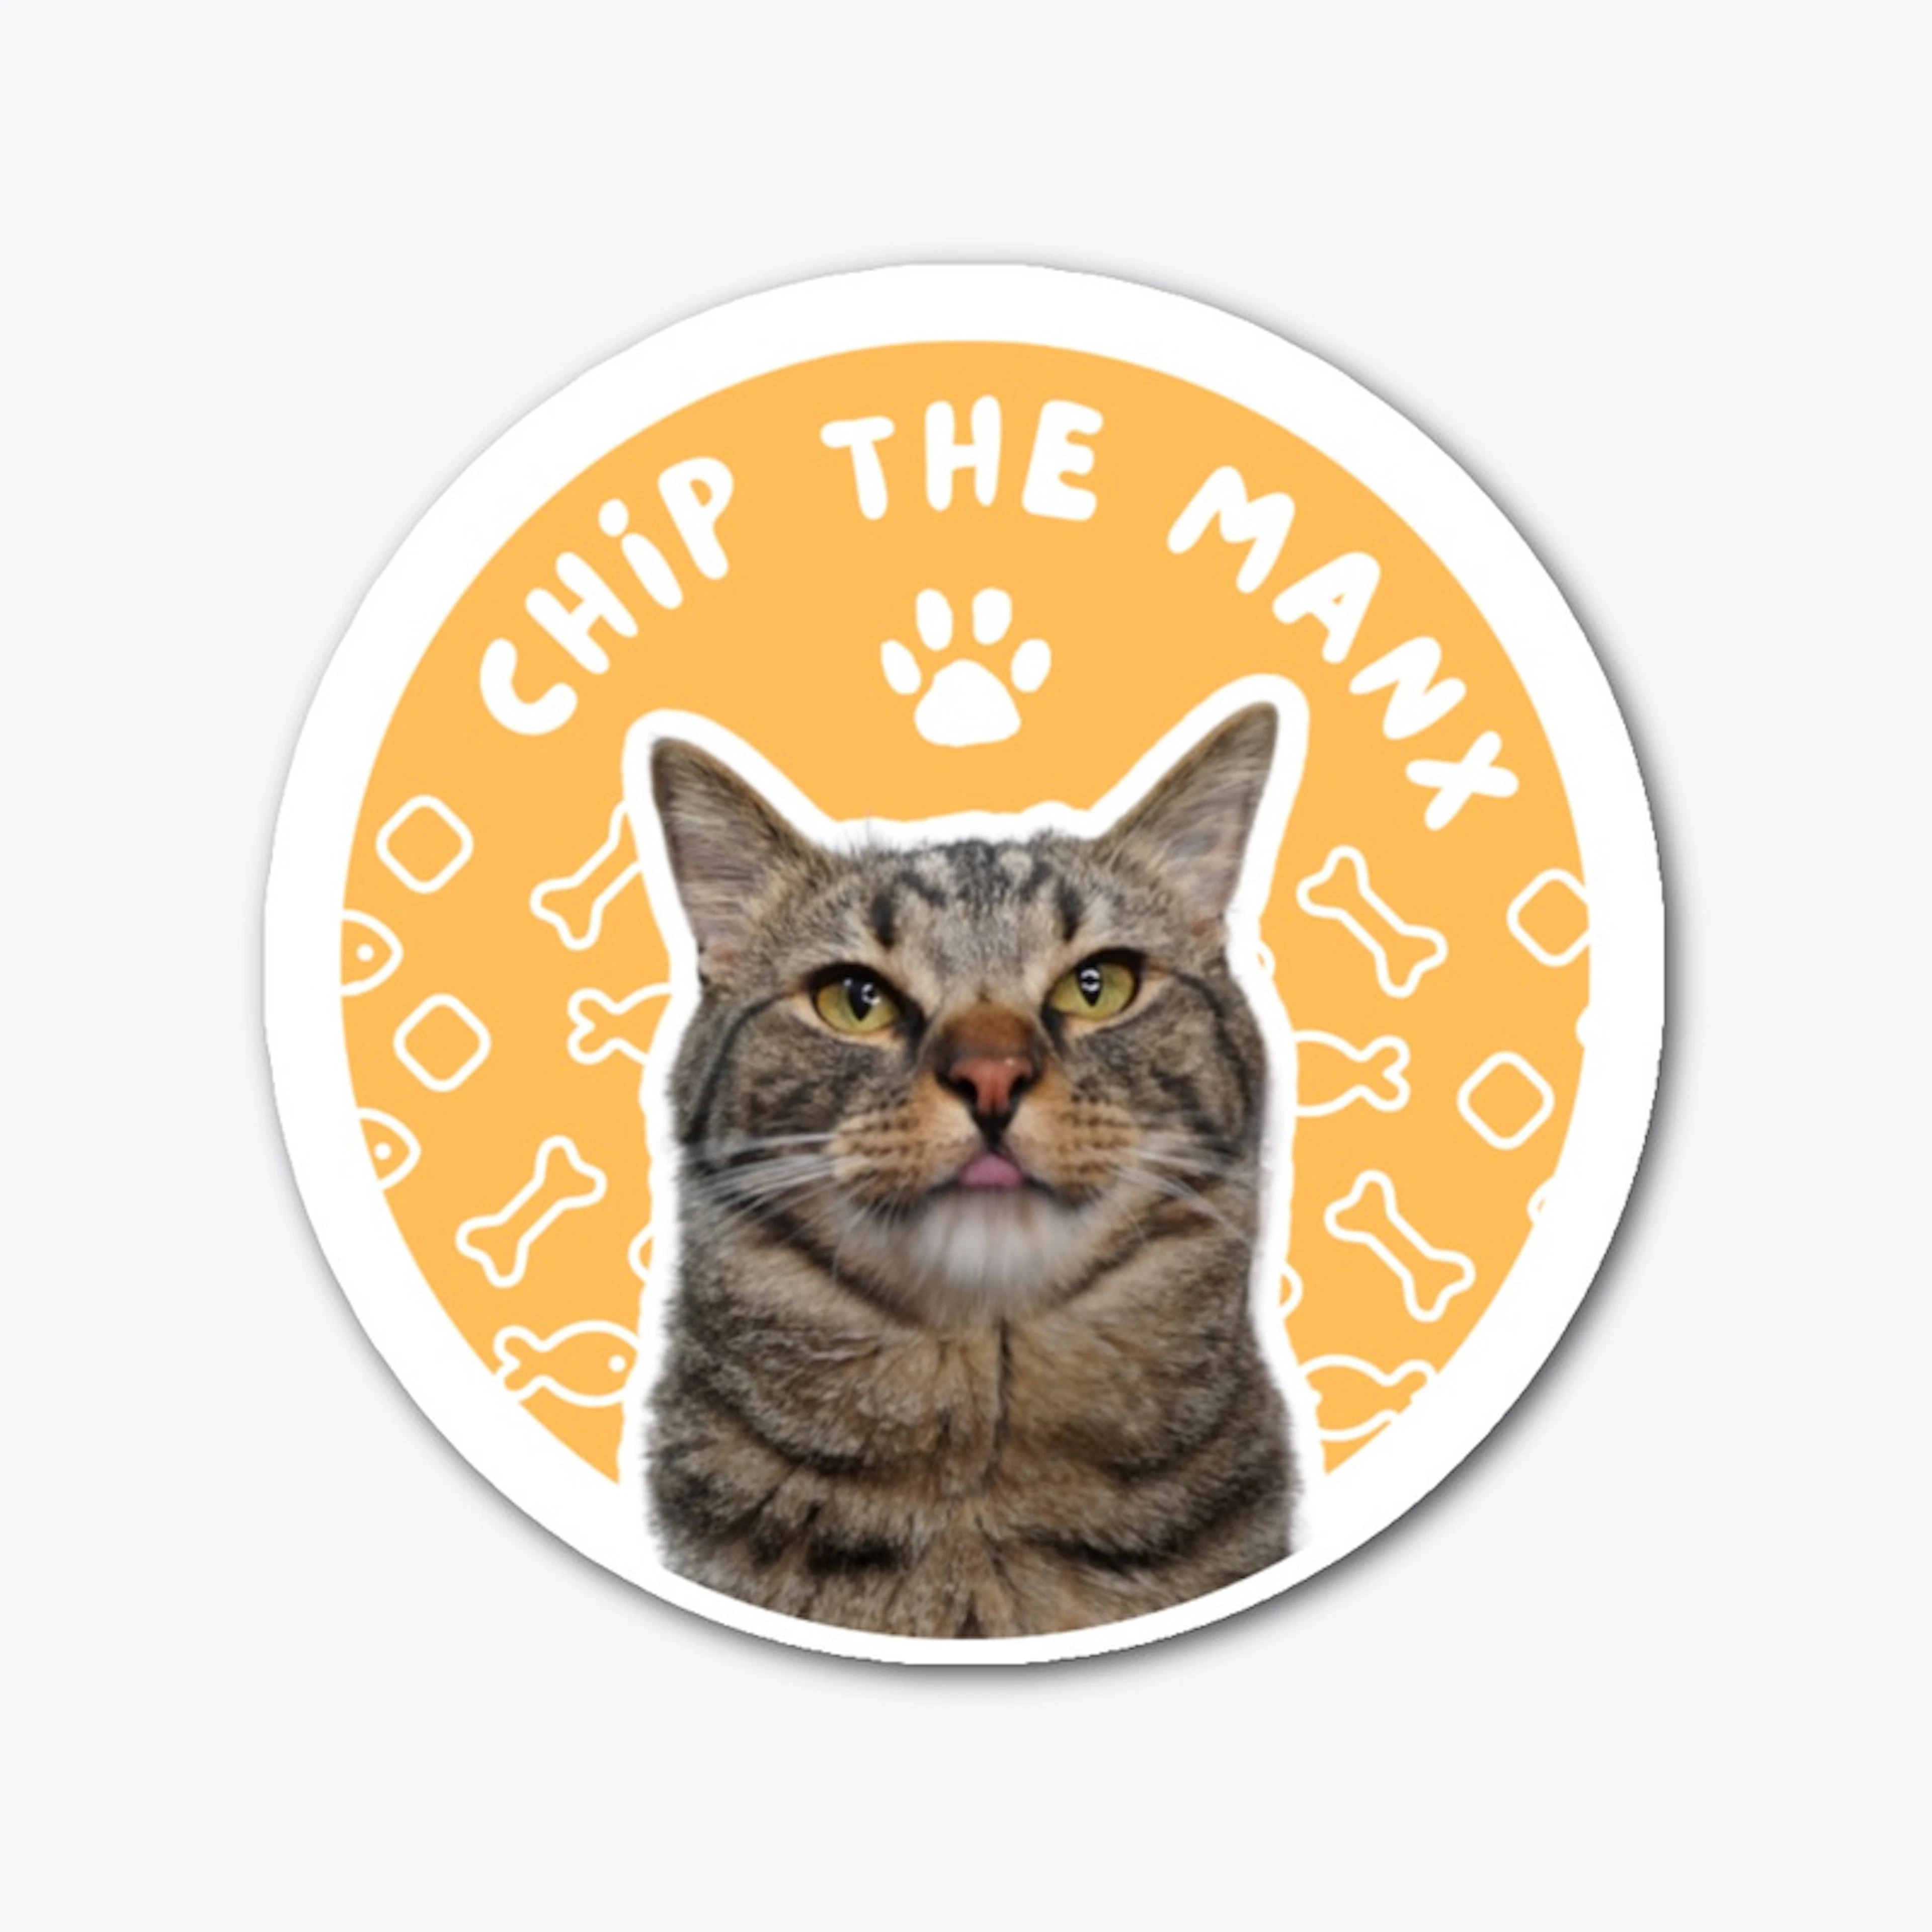 Chip The Manx Circle Sticker